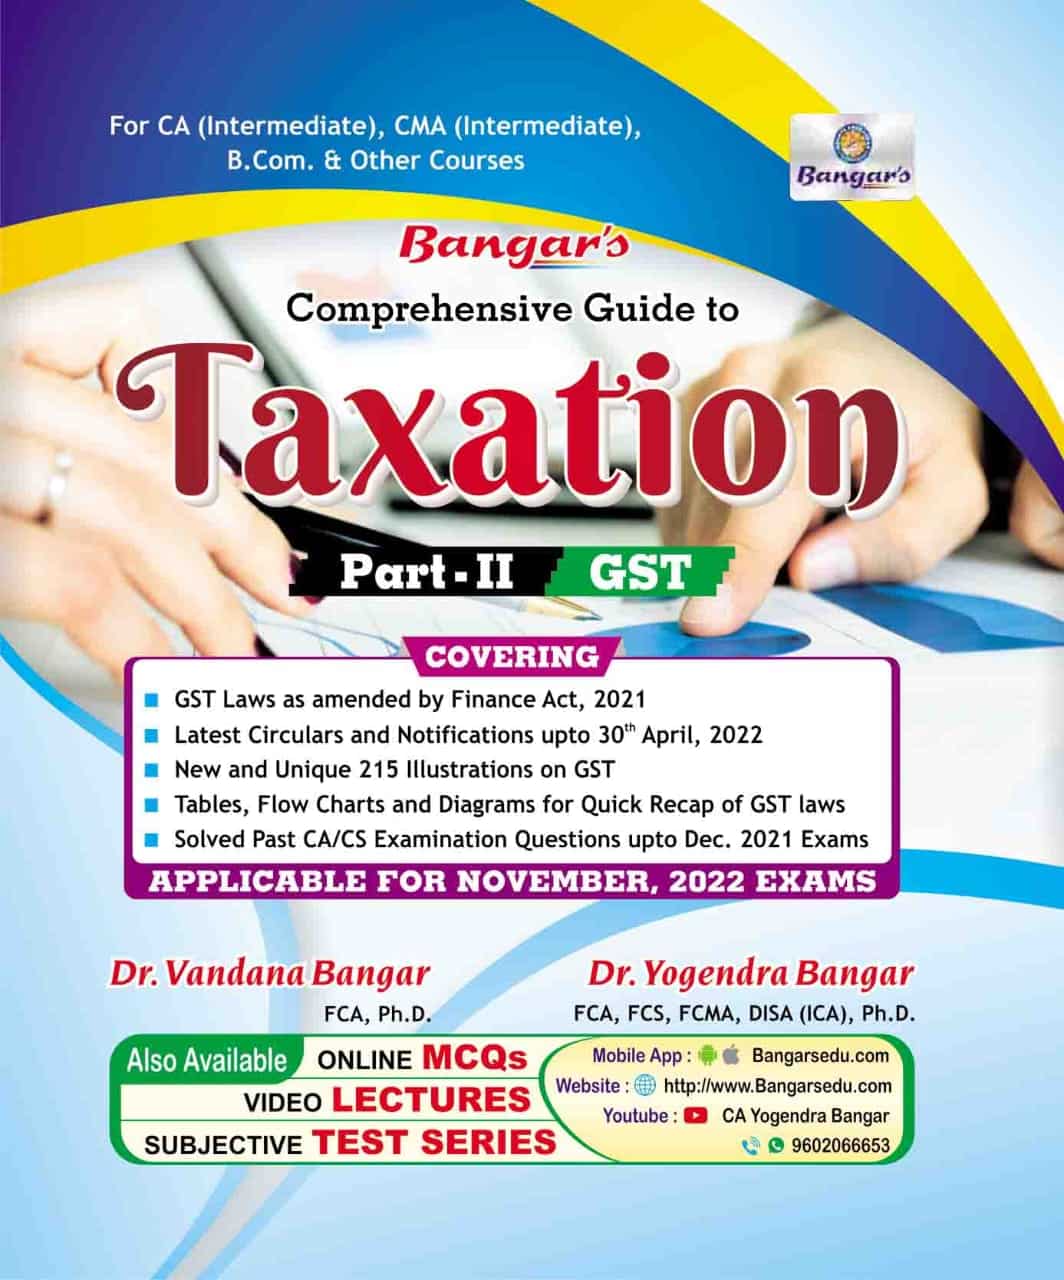 Bangar’s Comprehensive Guide to Taxation Part-II Indirect Taxes by Dr. Vandana Bangar and Dr. Yogendra Bangar (Aadhya Prakashan Publishing) for 2022 Exam